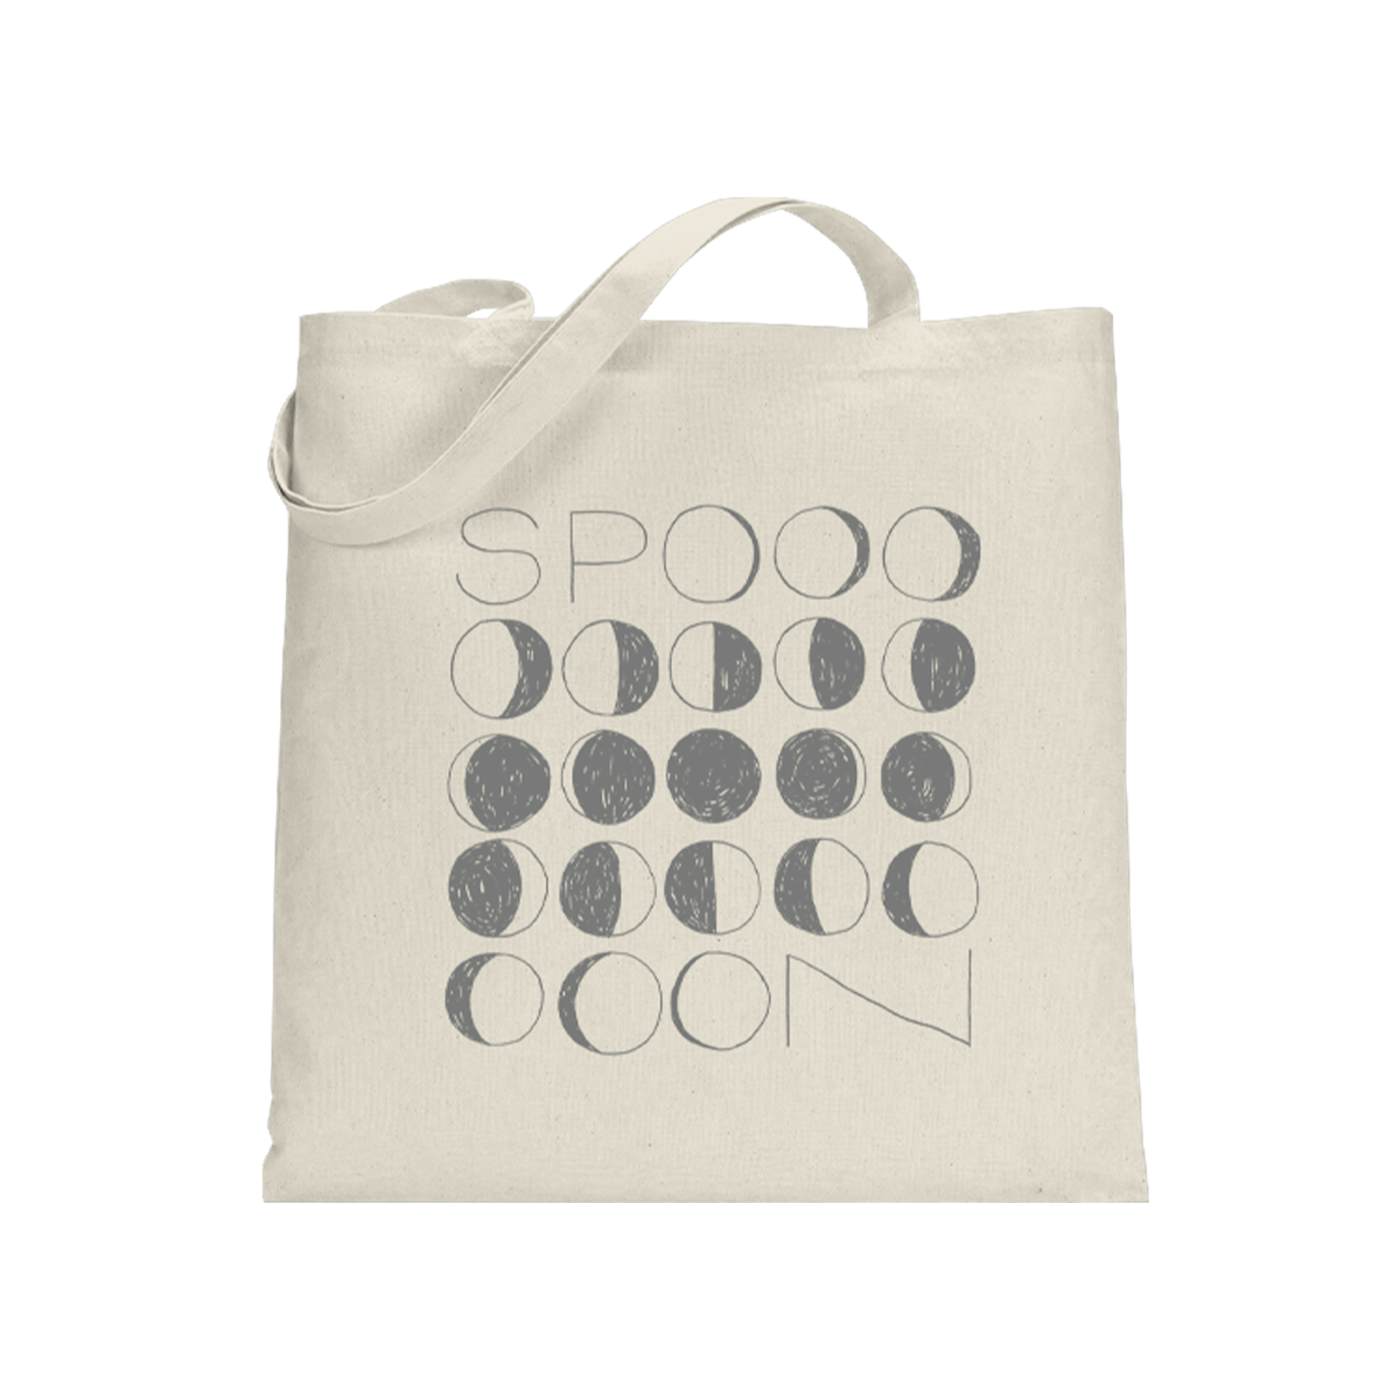 Spoon Moons Tote // Grey